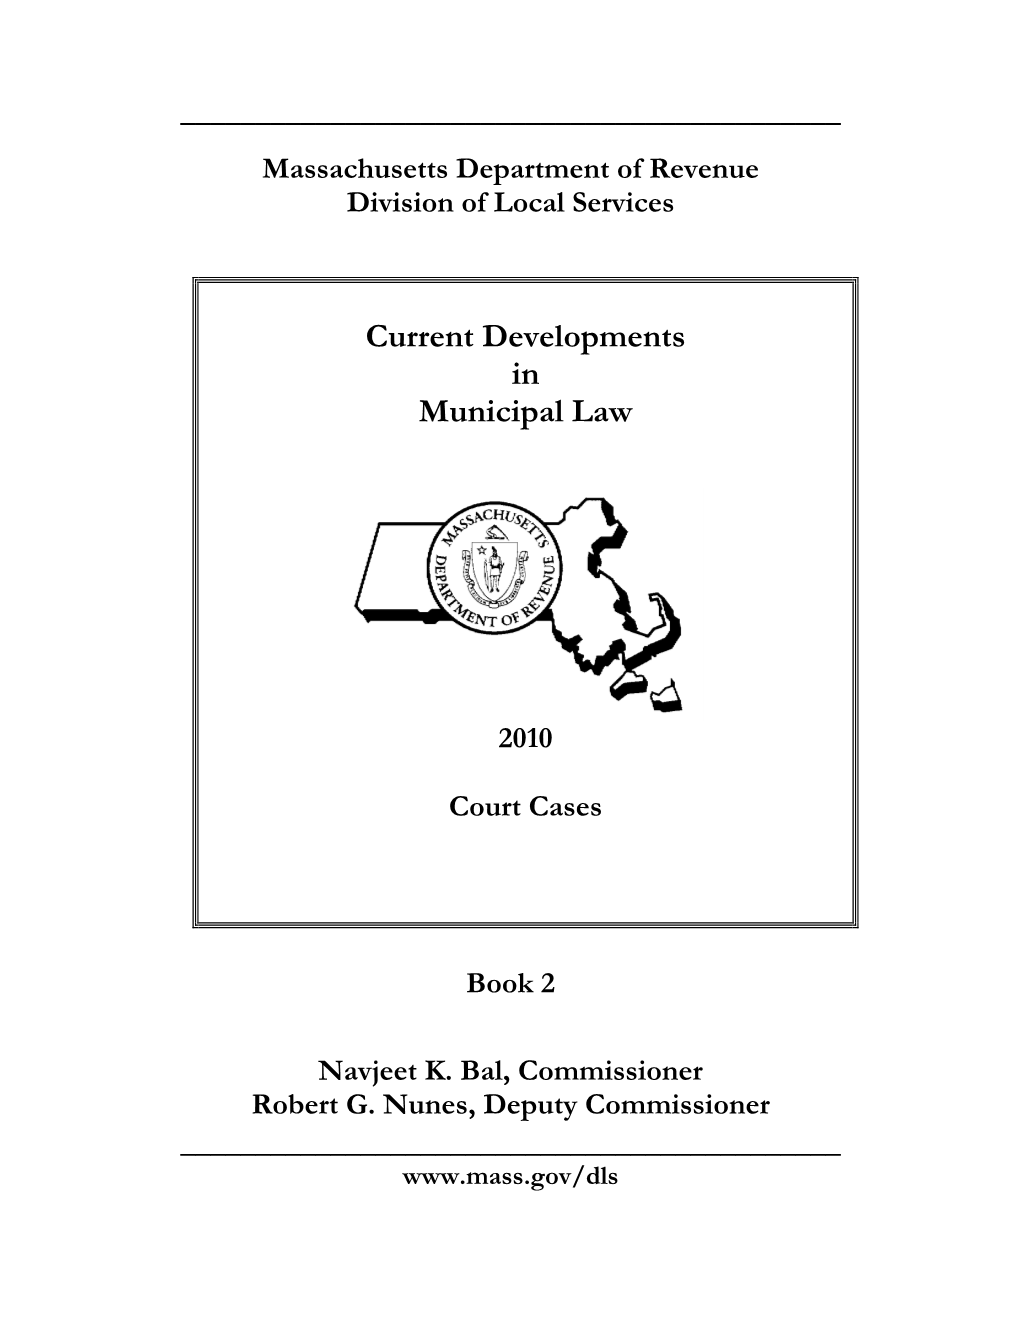 Current Developments in Municipal Law